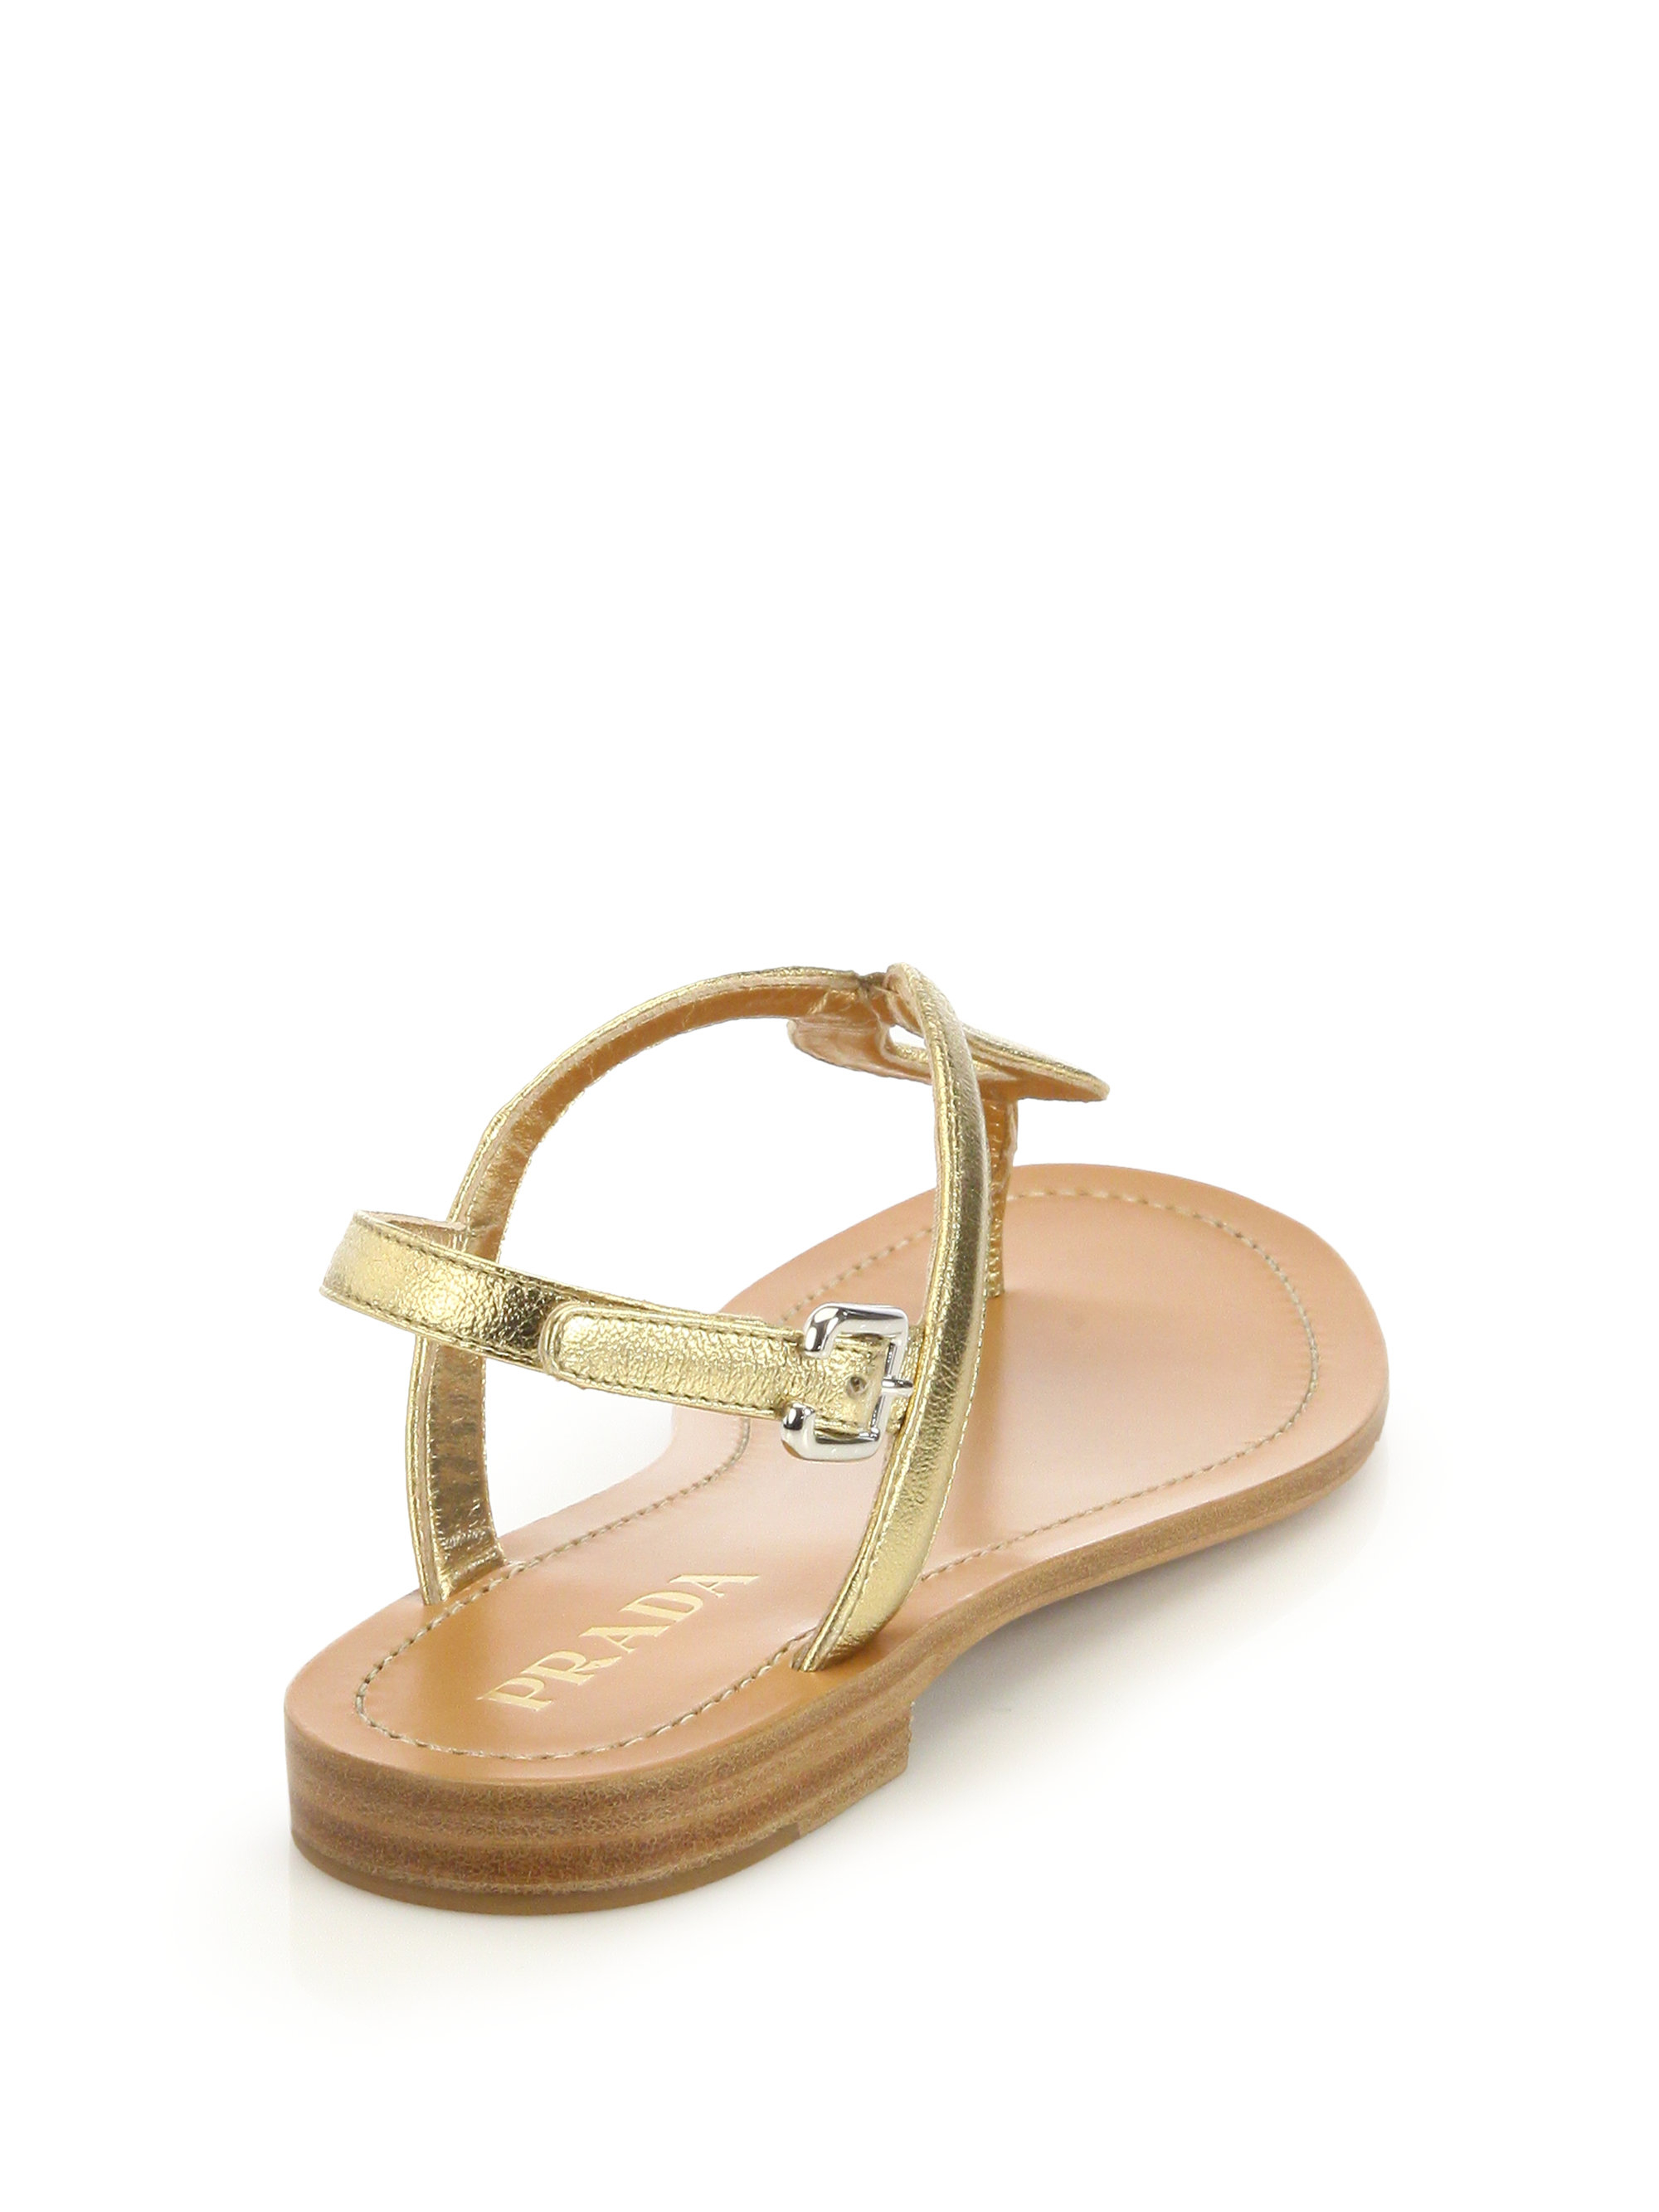 Prada Metallic Leather Thong Sandals in Metallic | Lyst